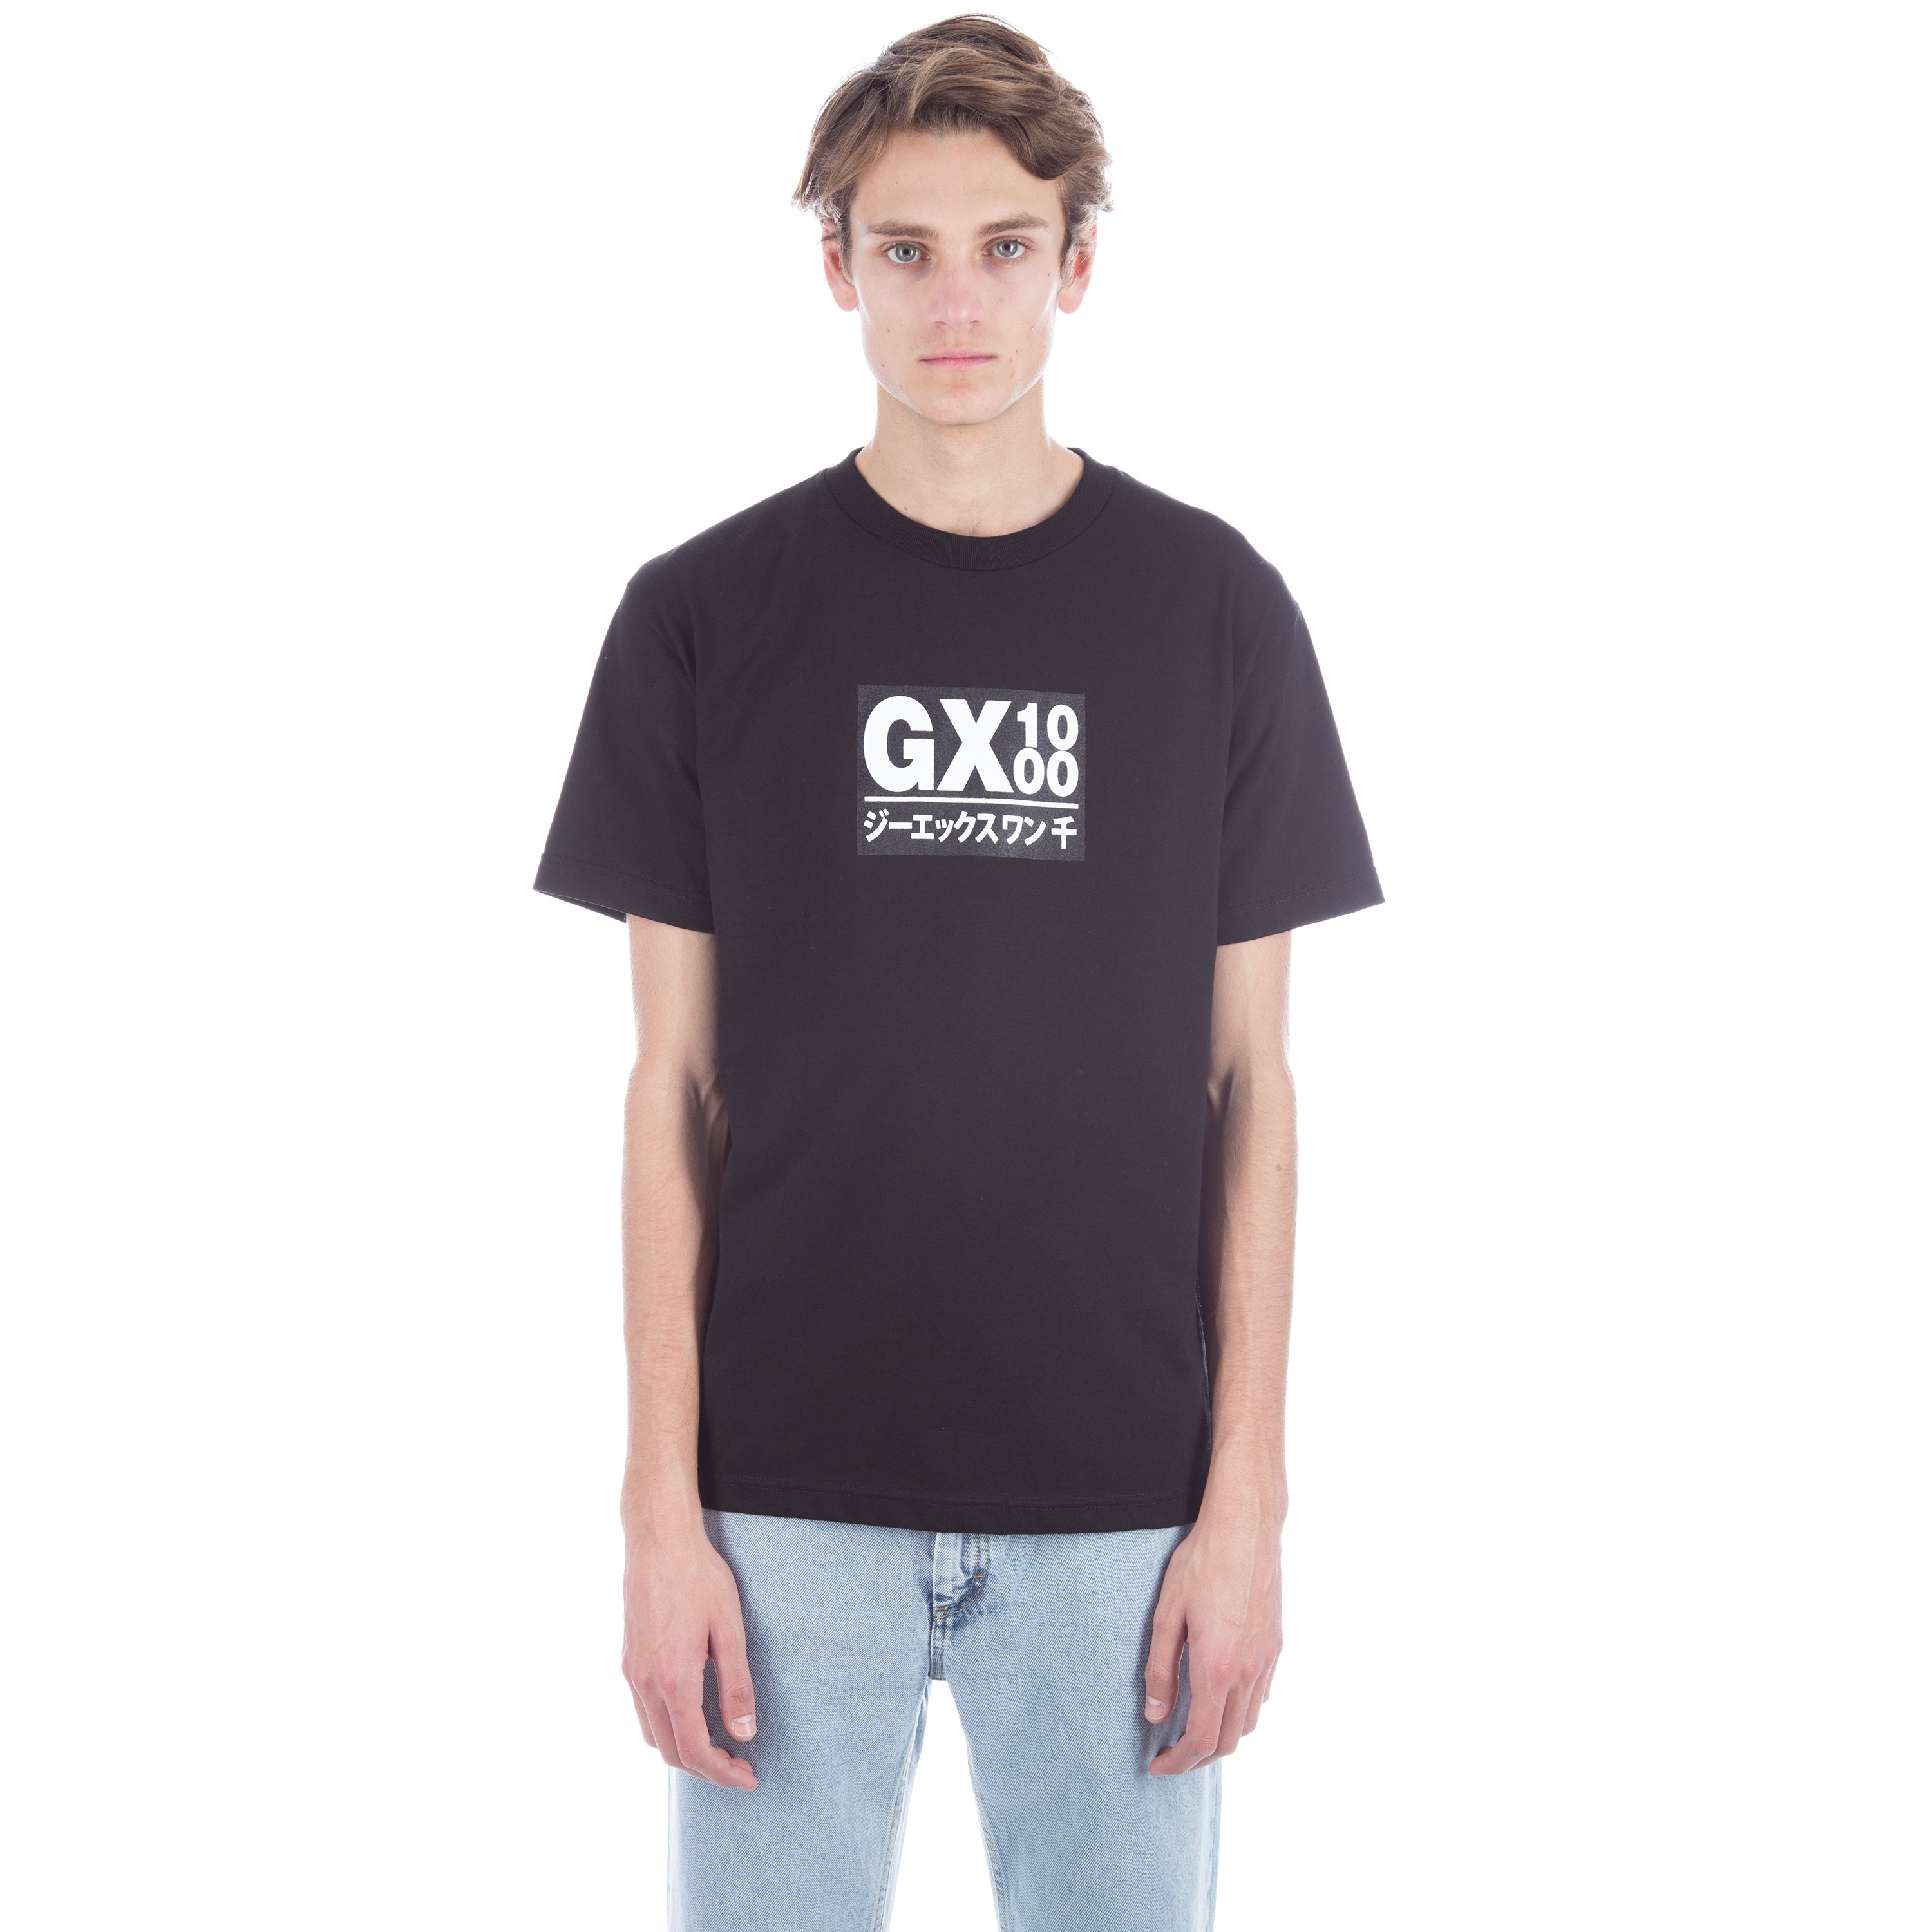 GX1000 Japan T-Shirt (Black/White) - Consortium.